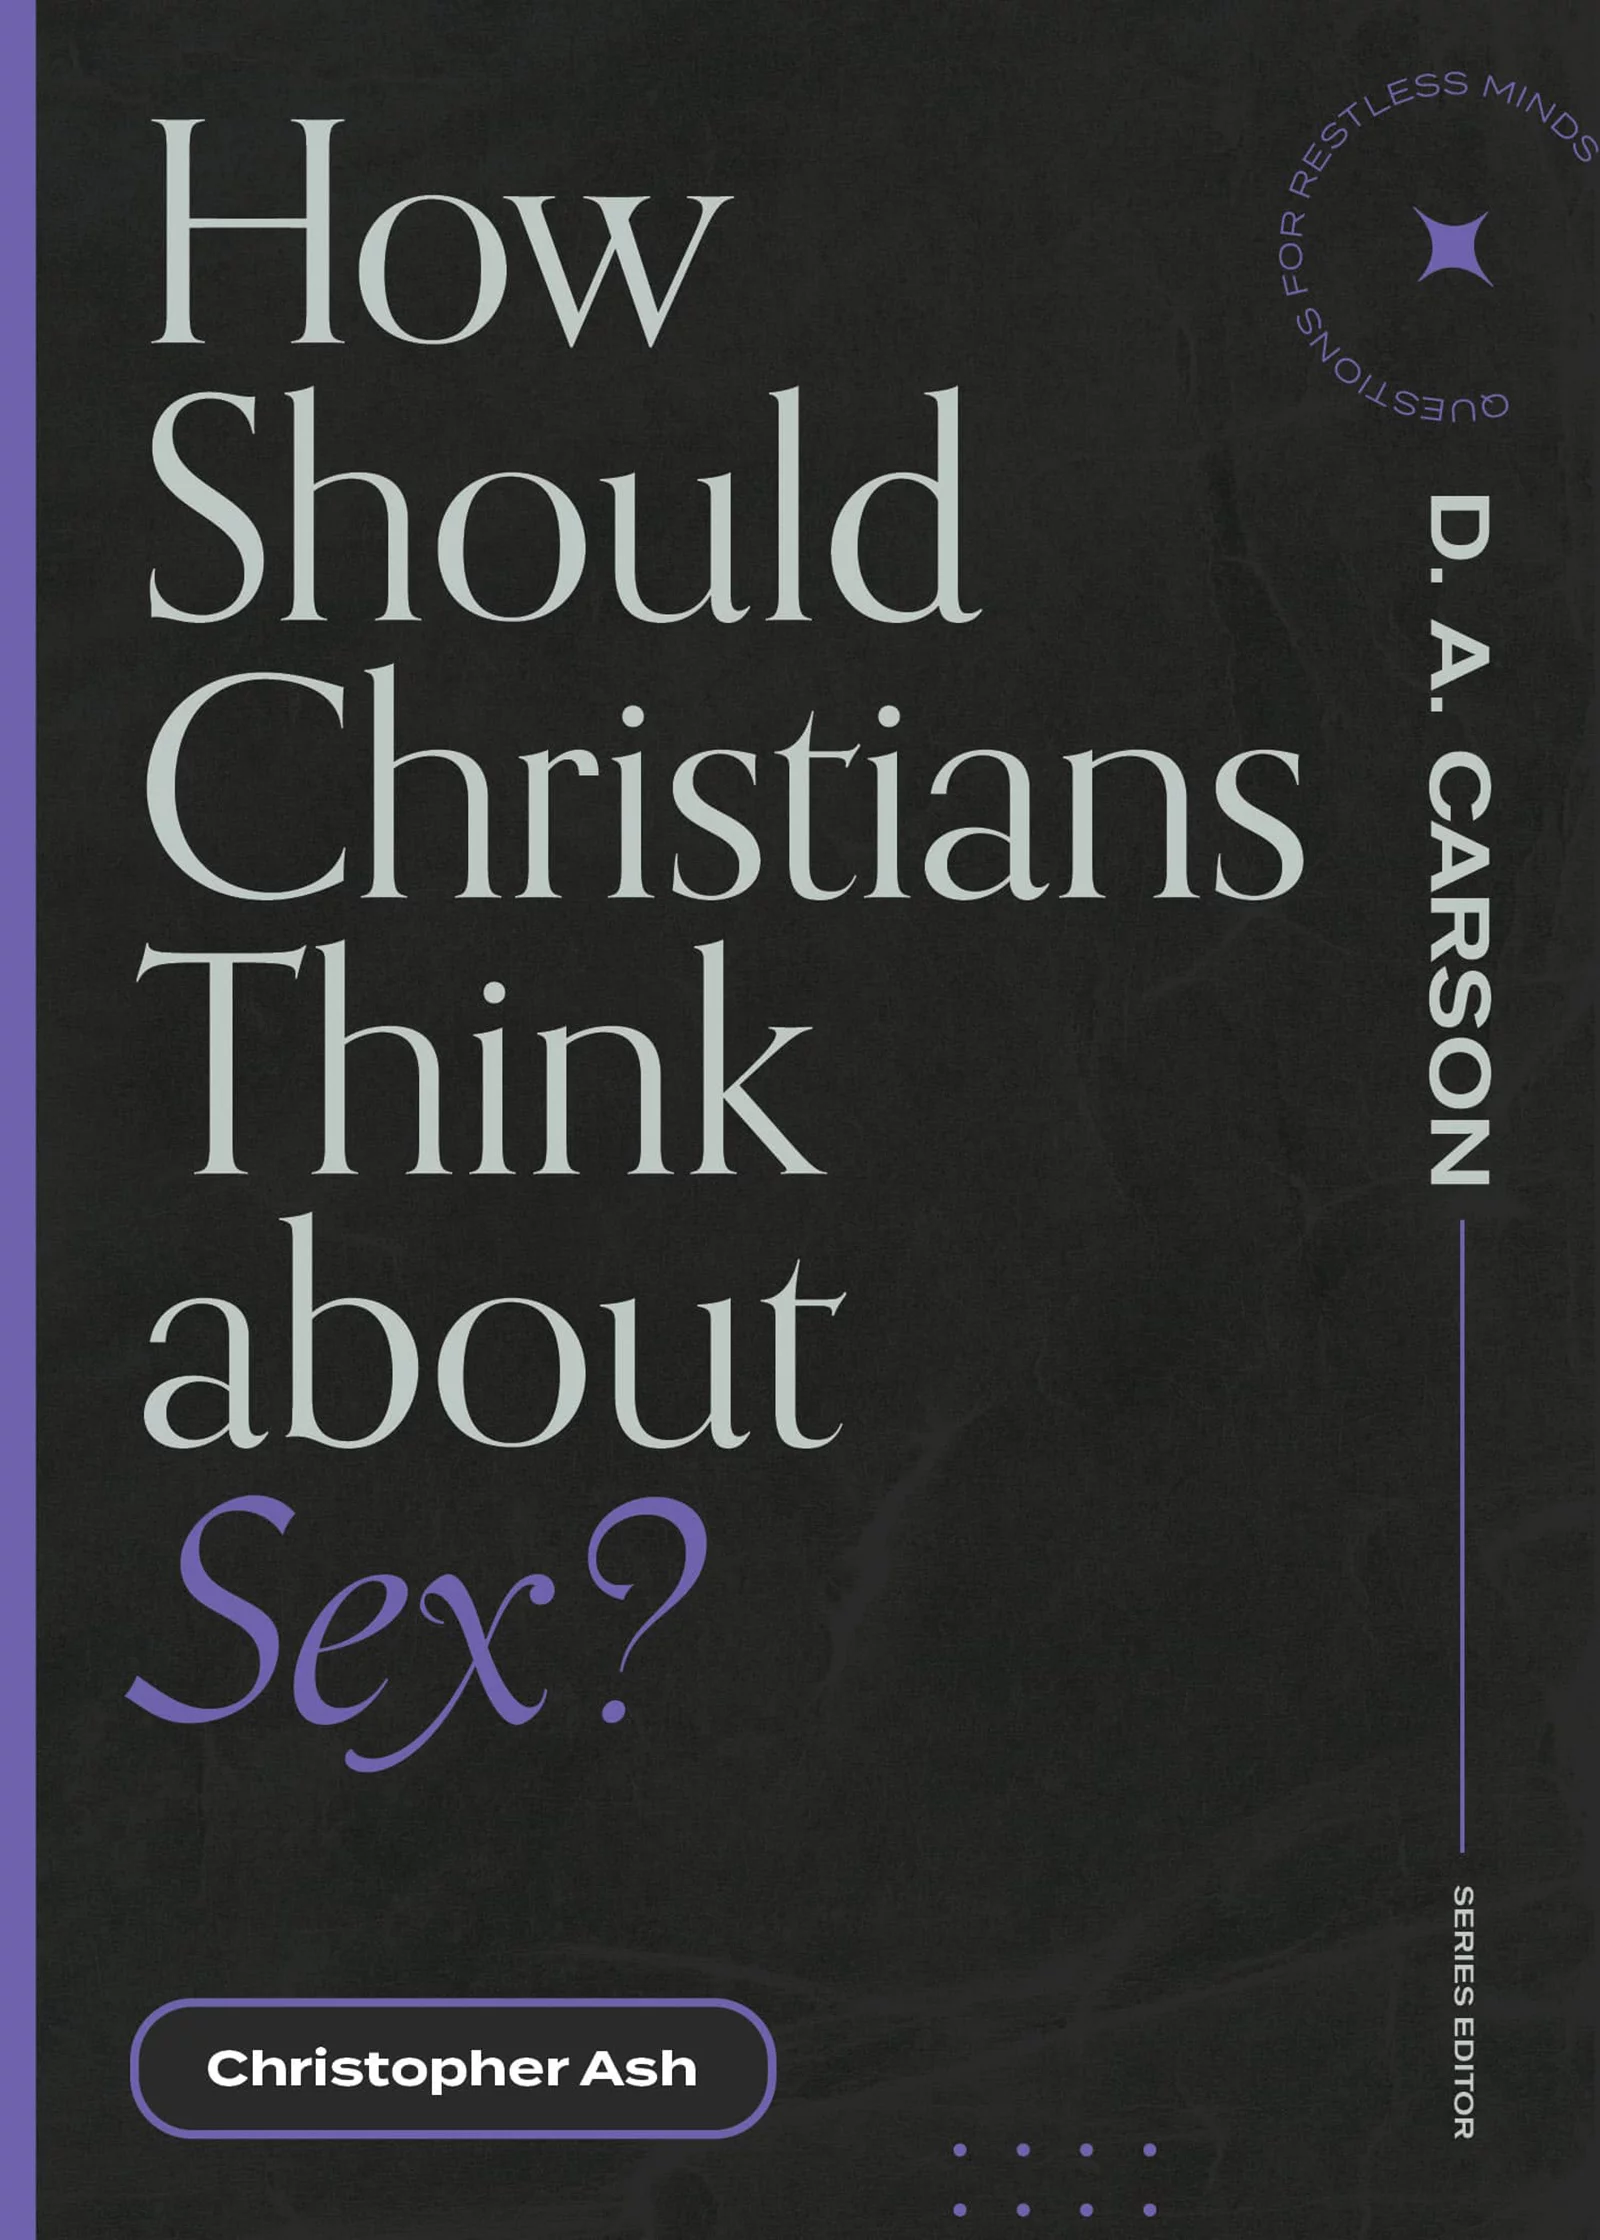  2022/08/How-should-Christians-think-about-sex.webp 